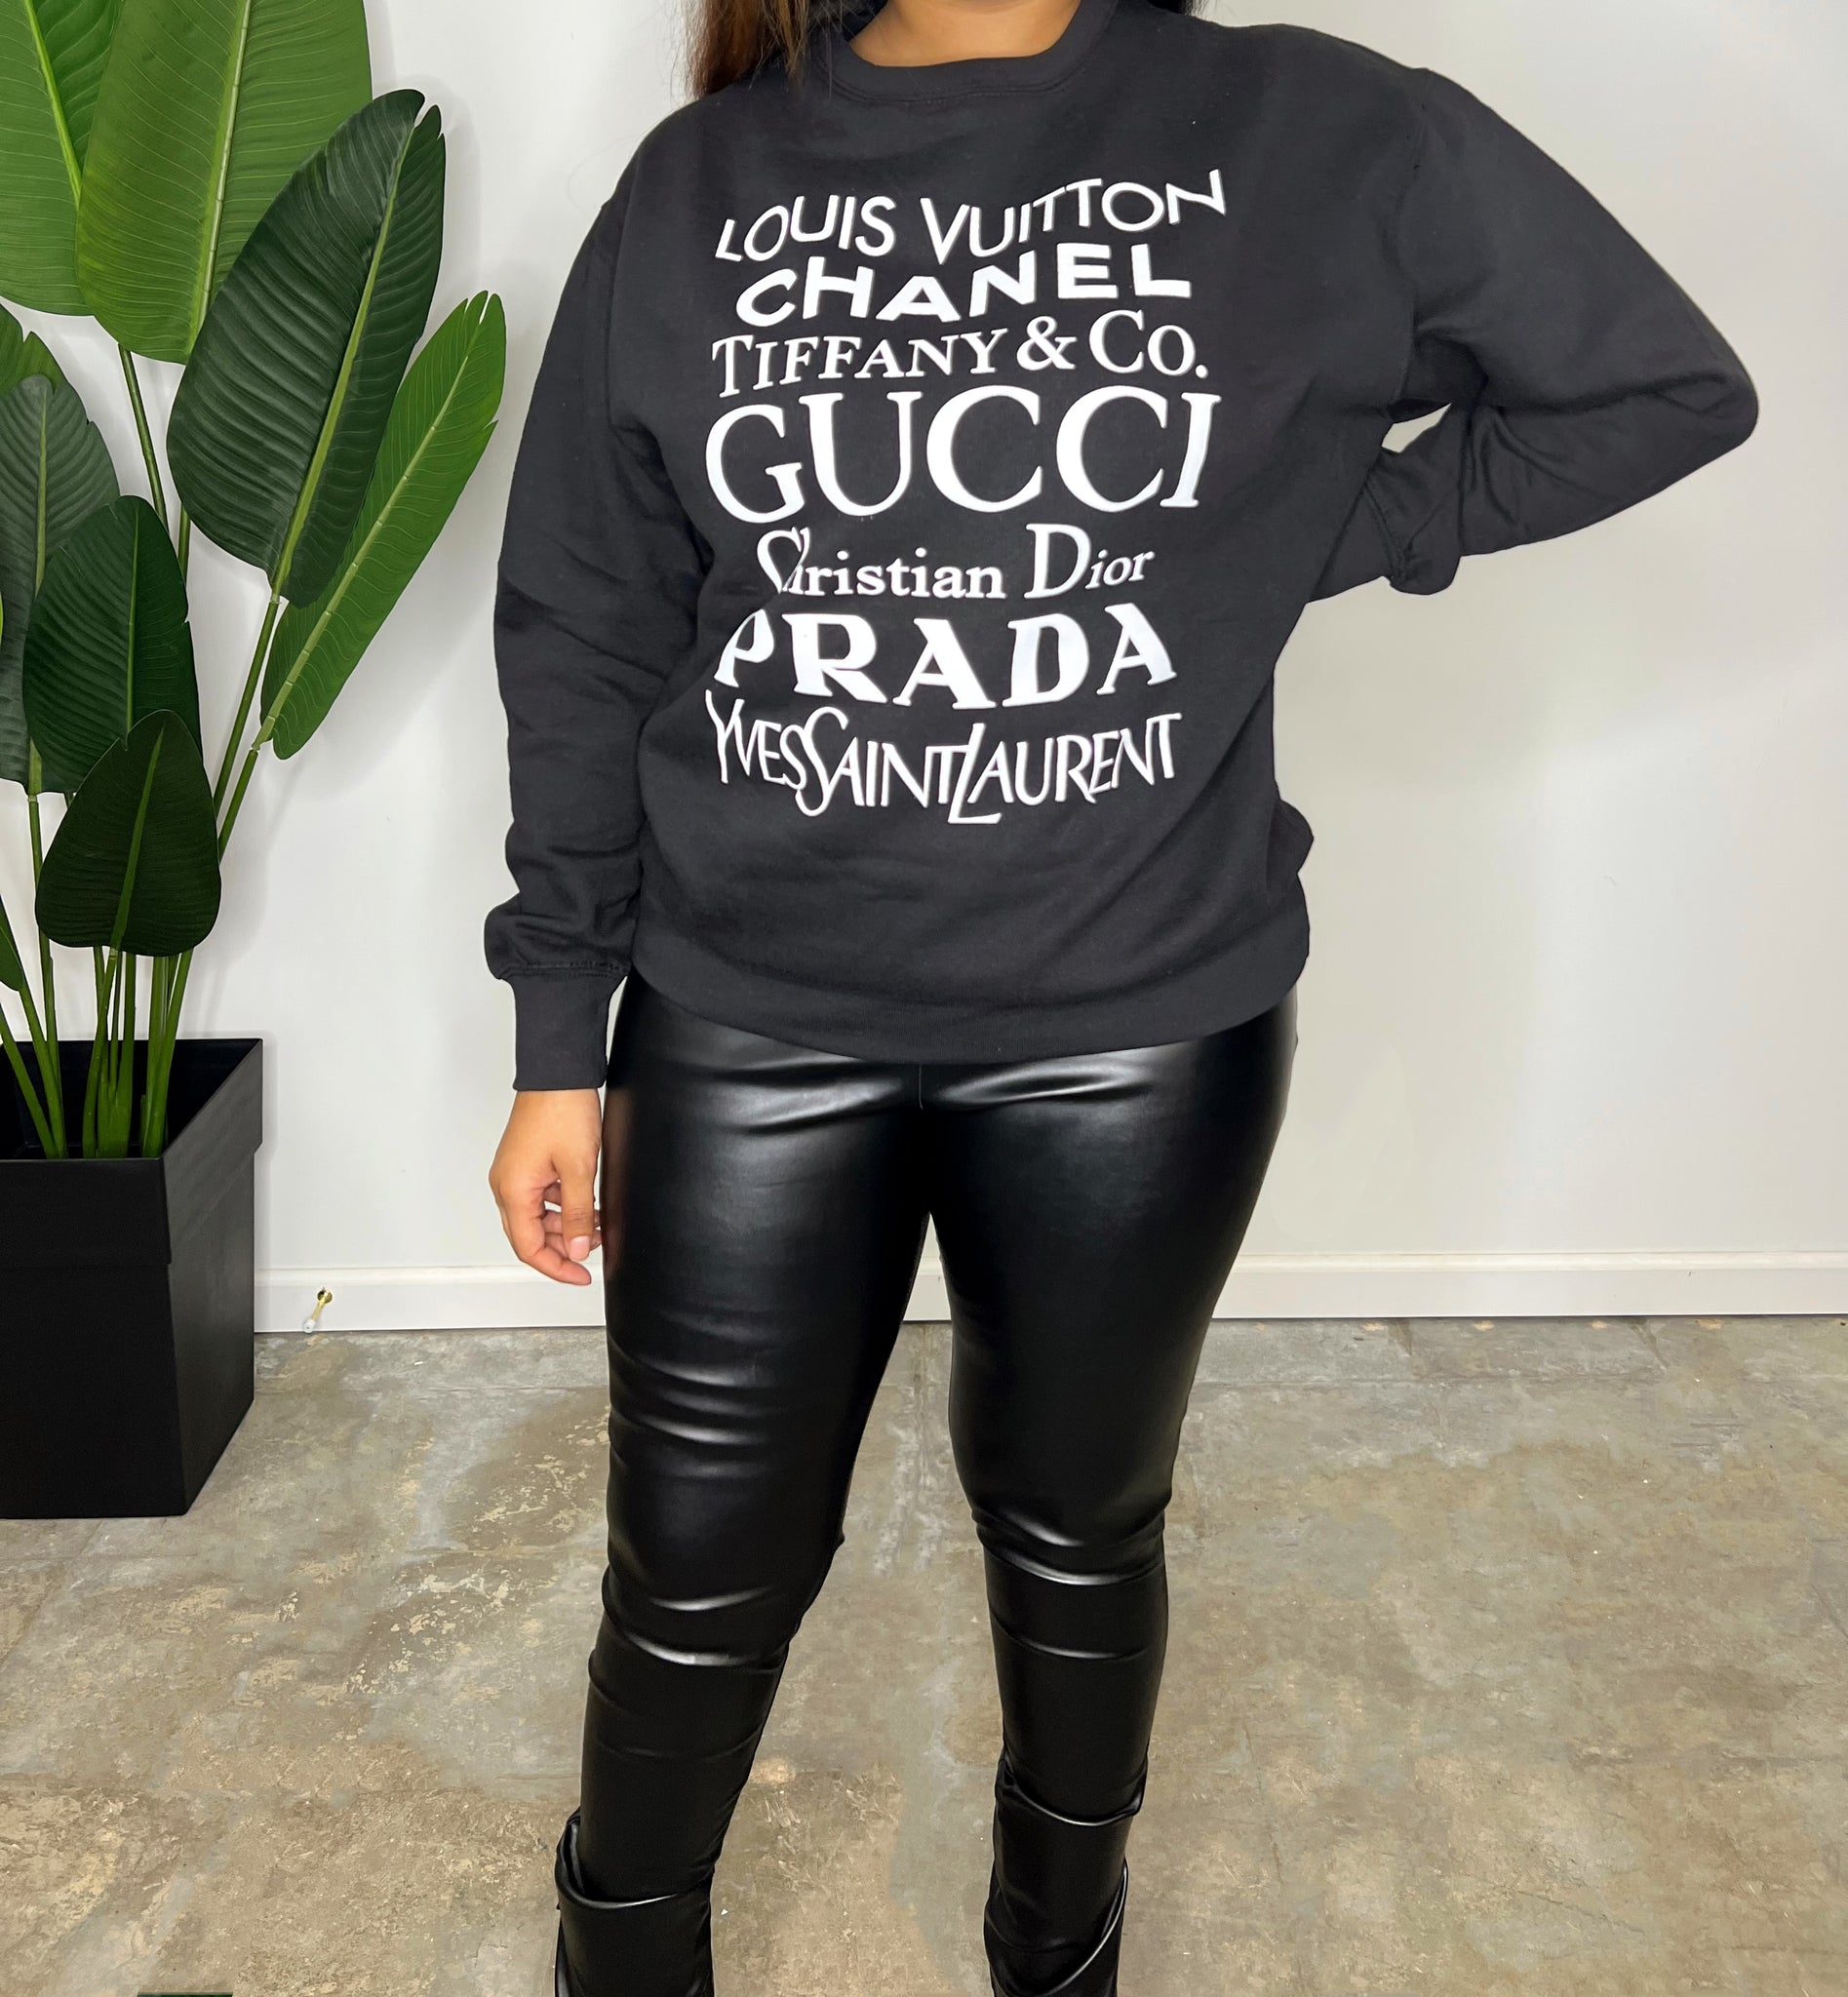 gucci, prada, chanel sweatshirt for women